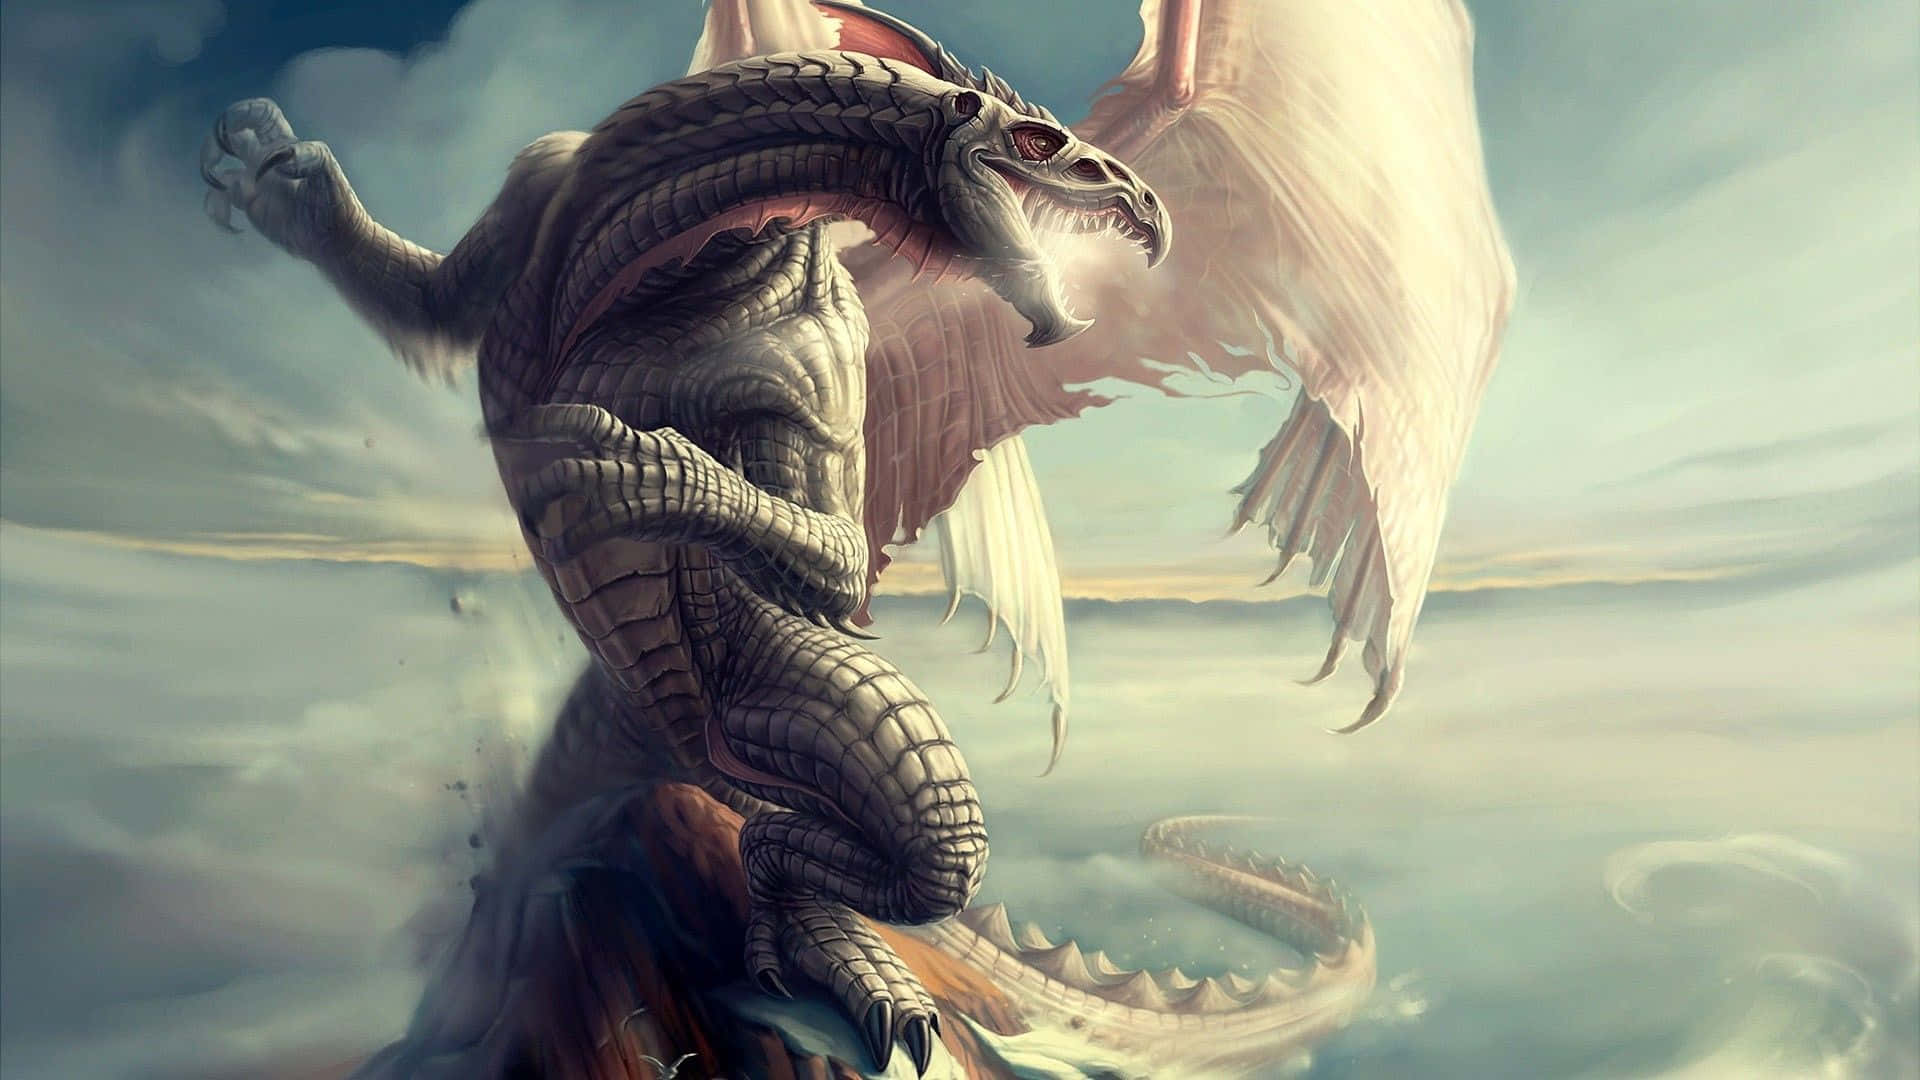  Elder Scrolls SK Hintergrundbild 1920x1080. Download Witness the ferocious power of the Epic Dragon Wallpaper